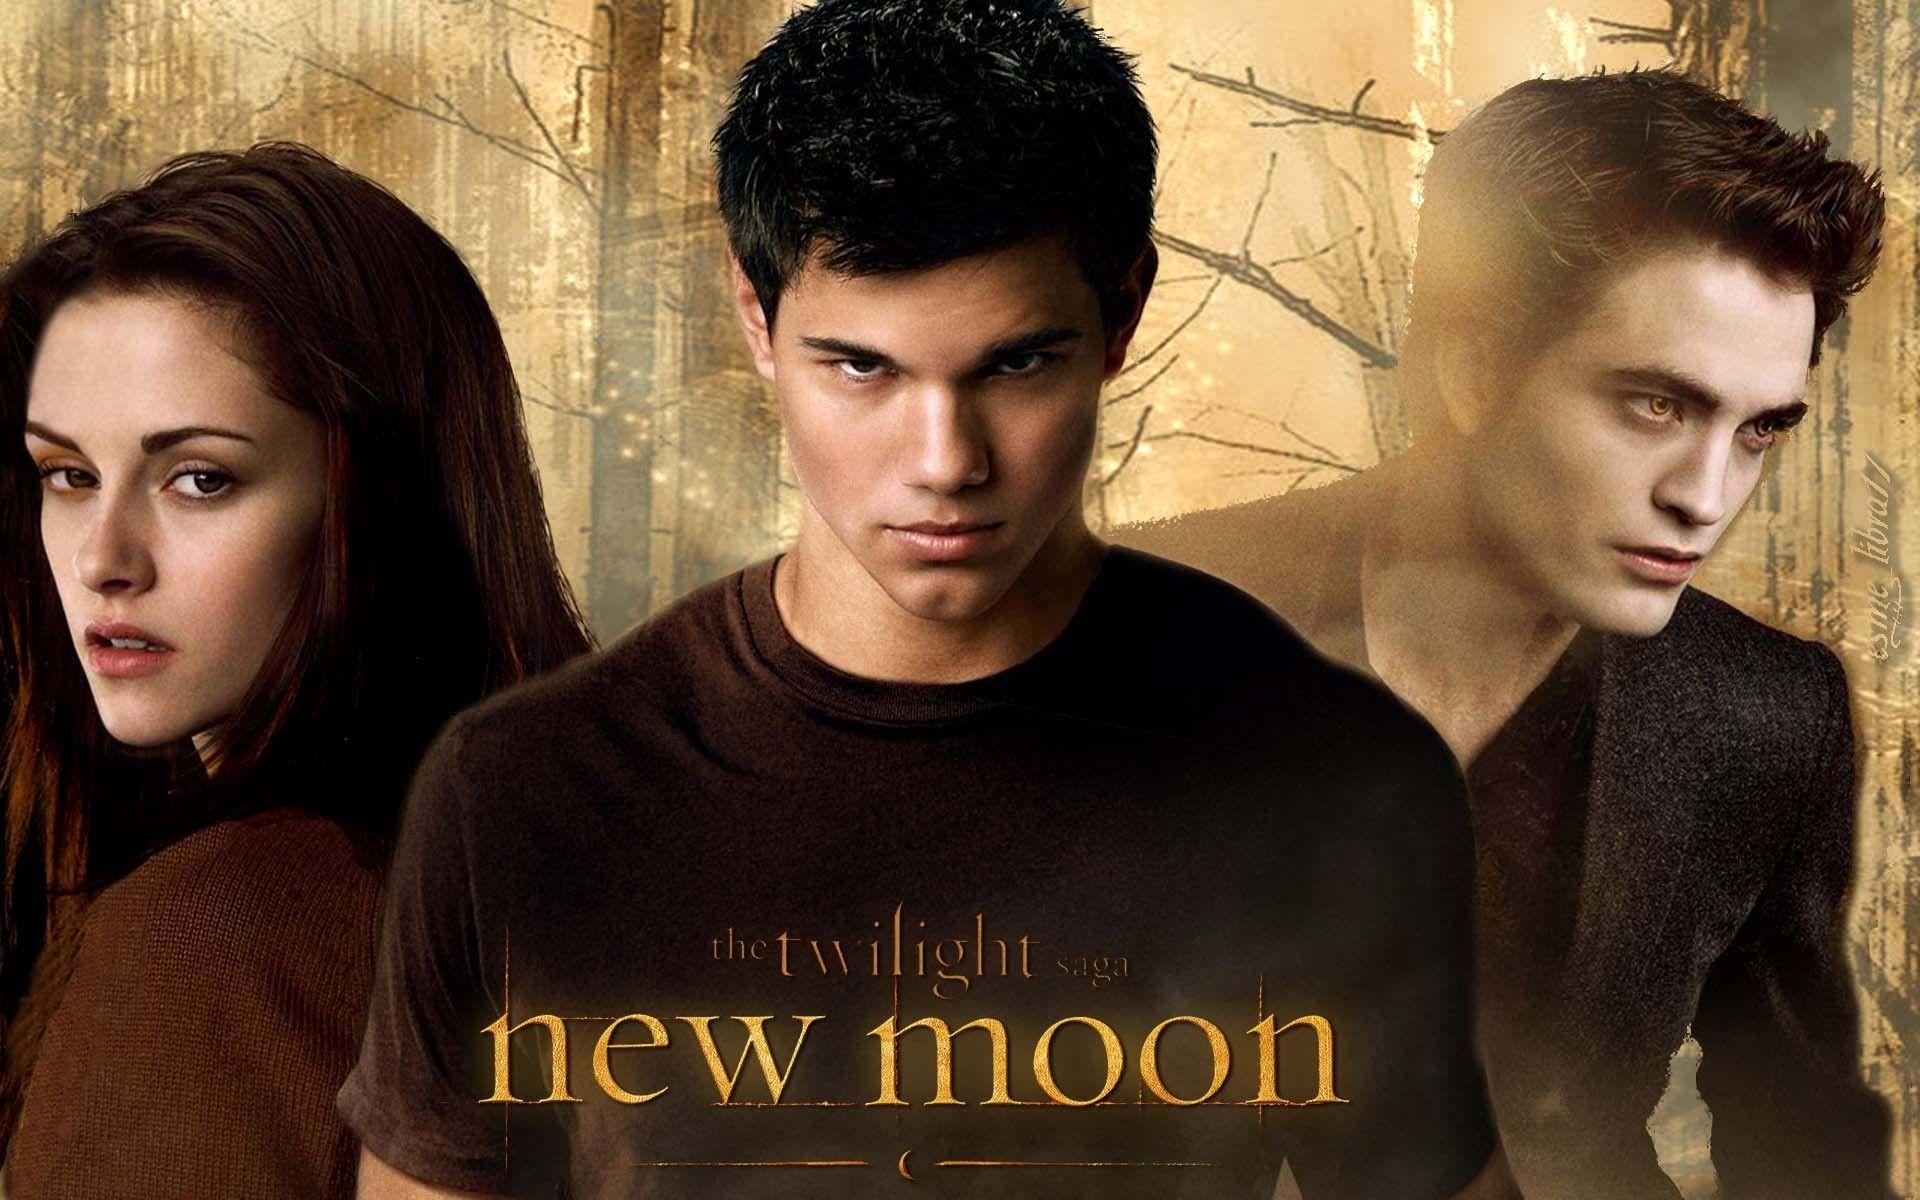 jacob and bella new moon